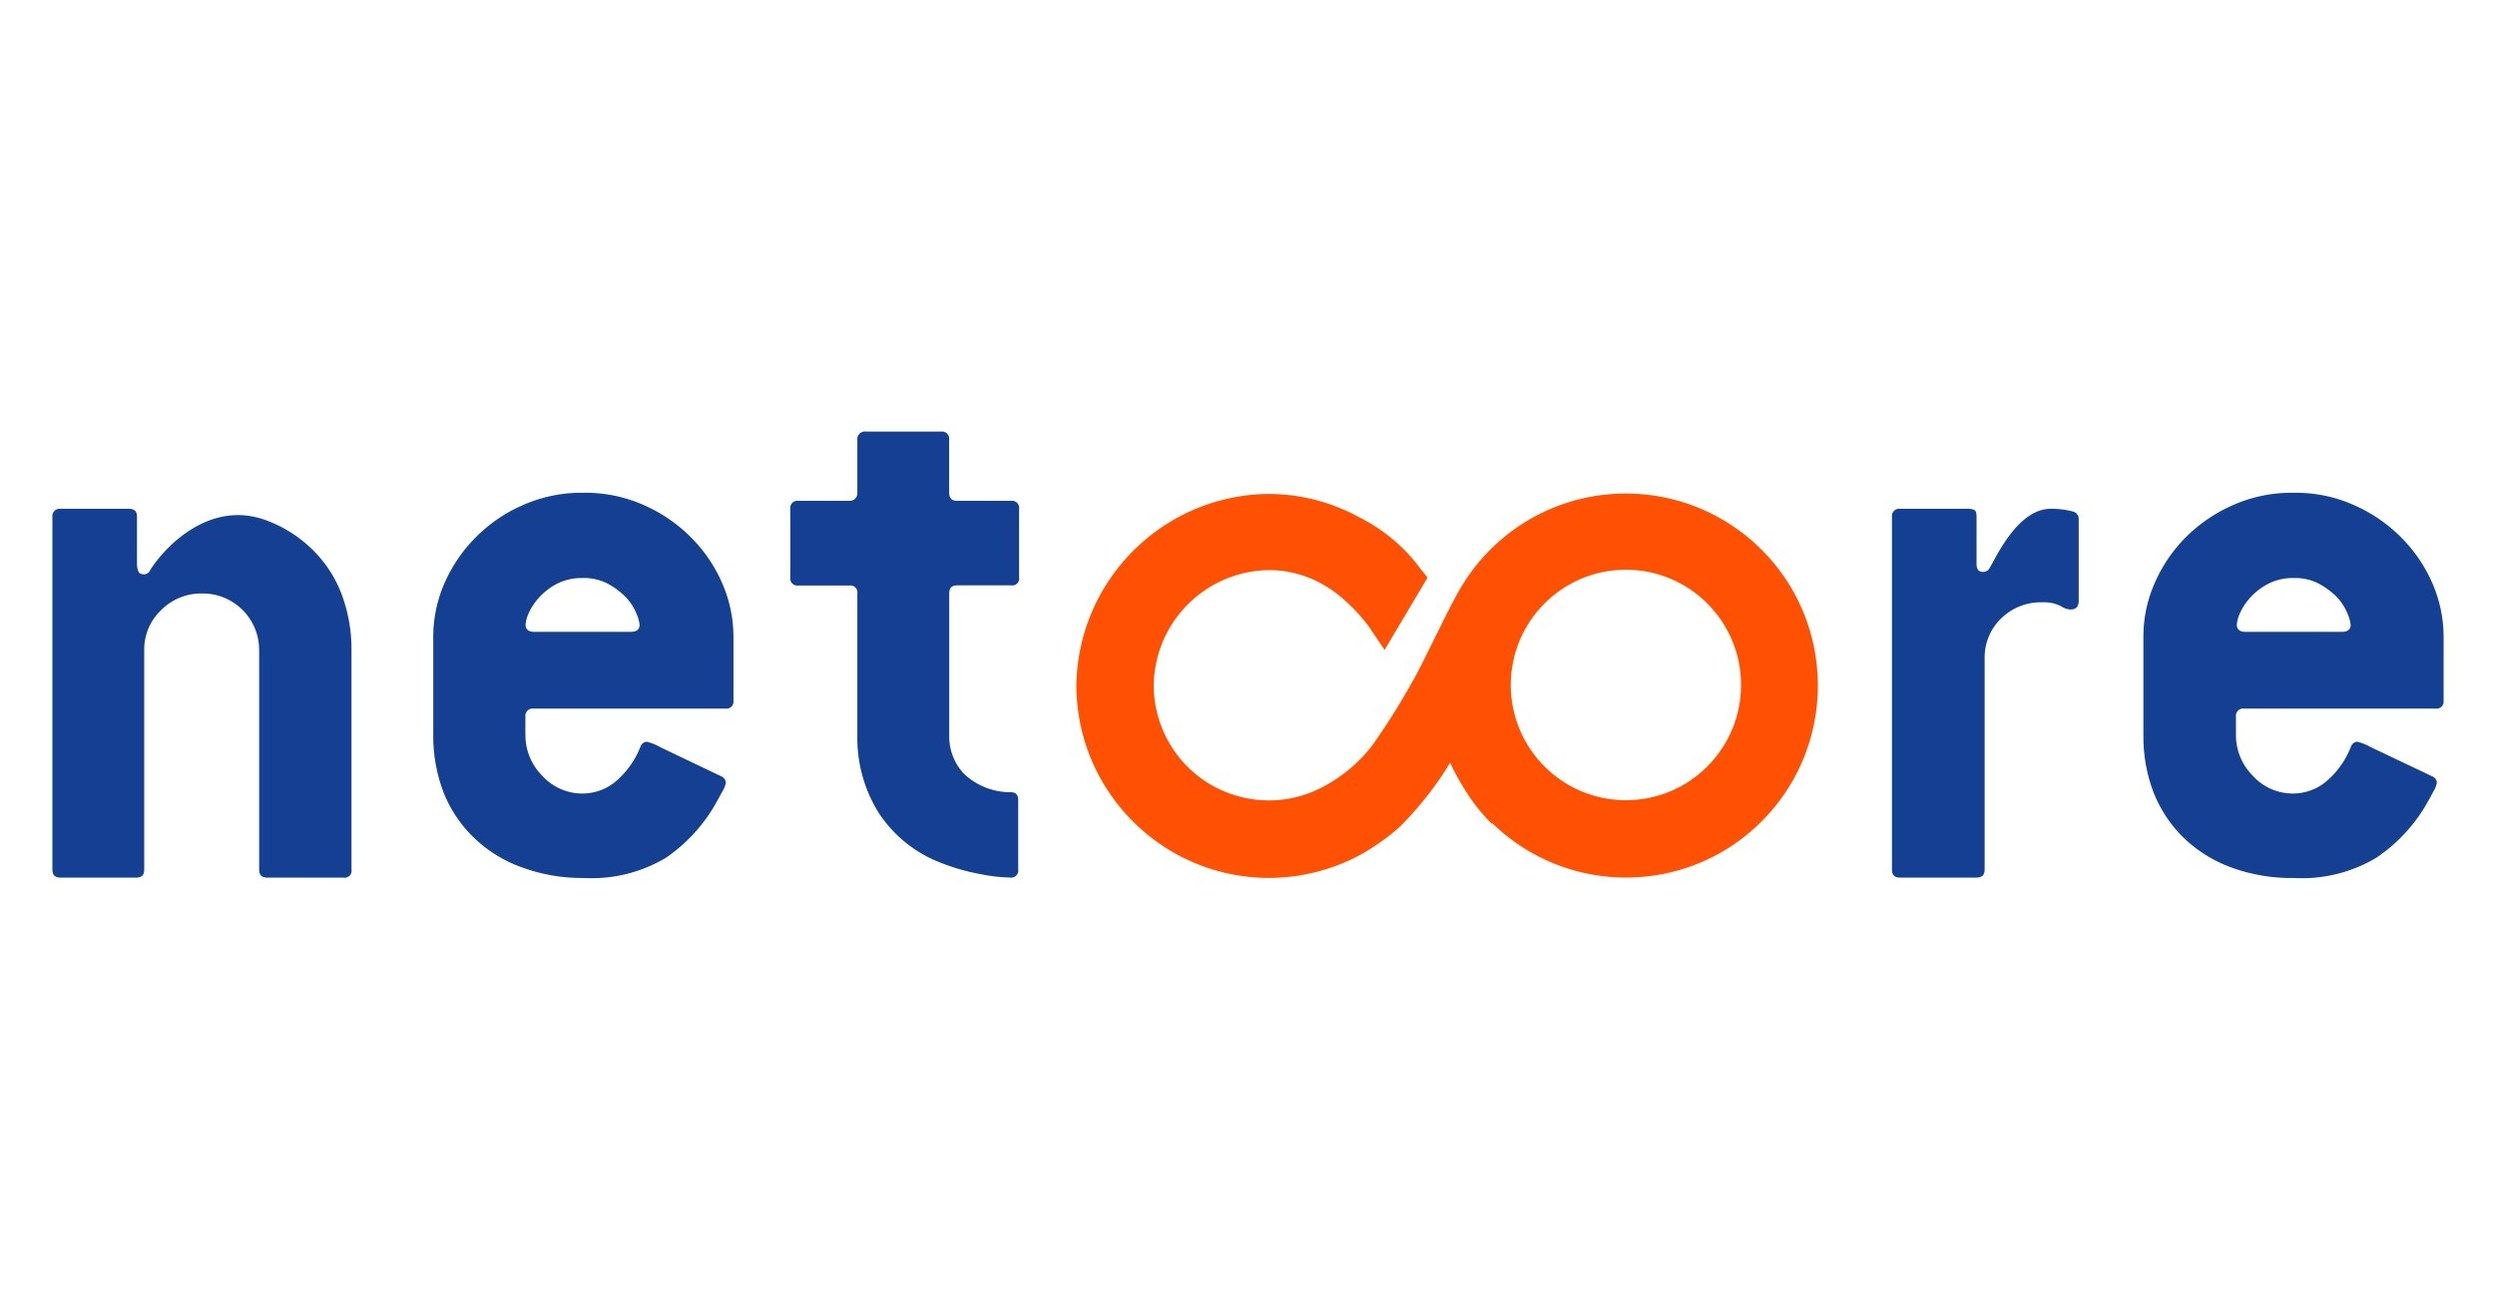 Netcore Cloud Pvt Ltd